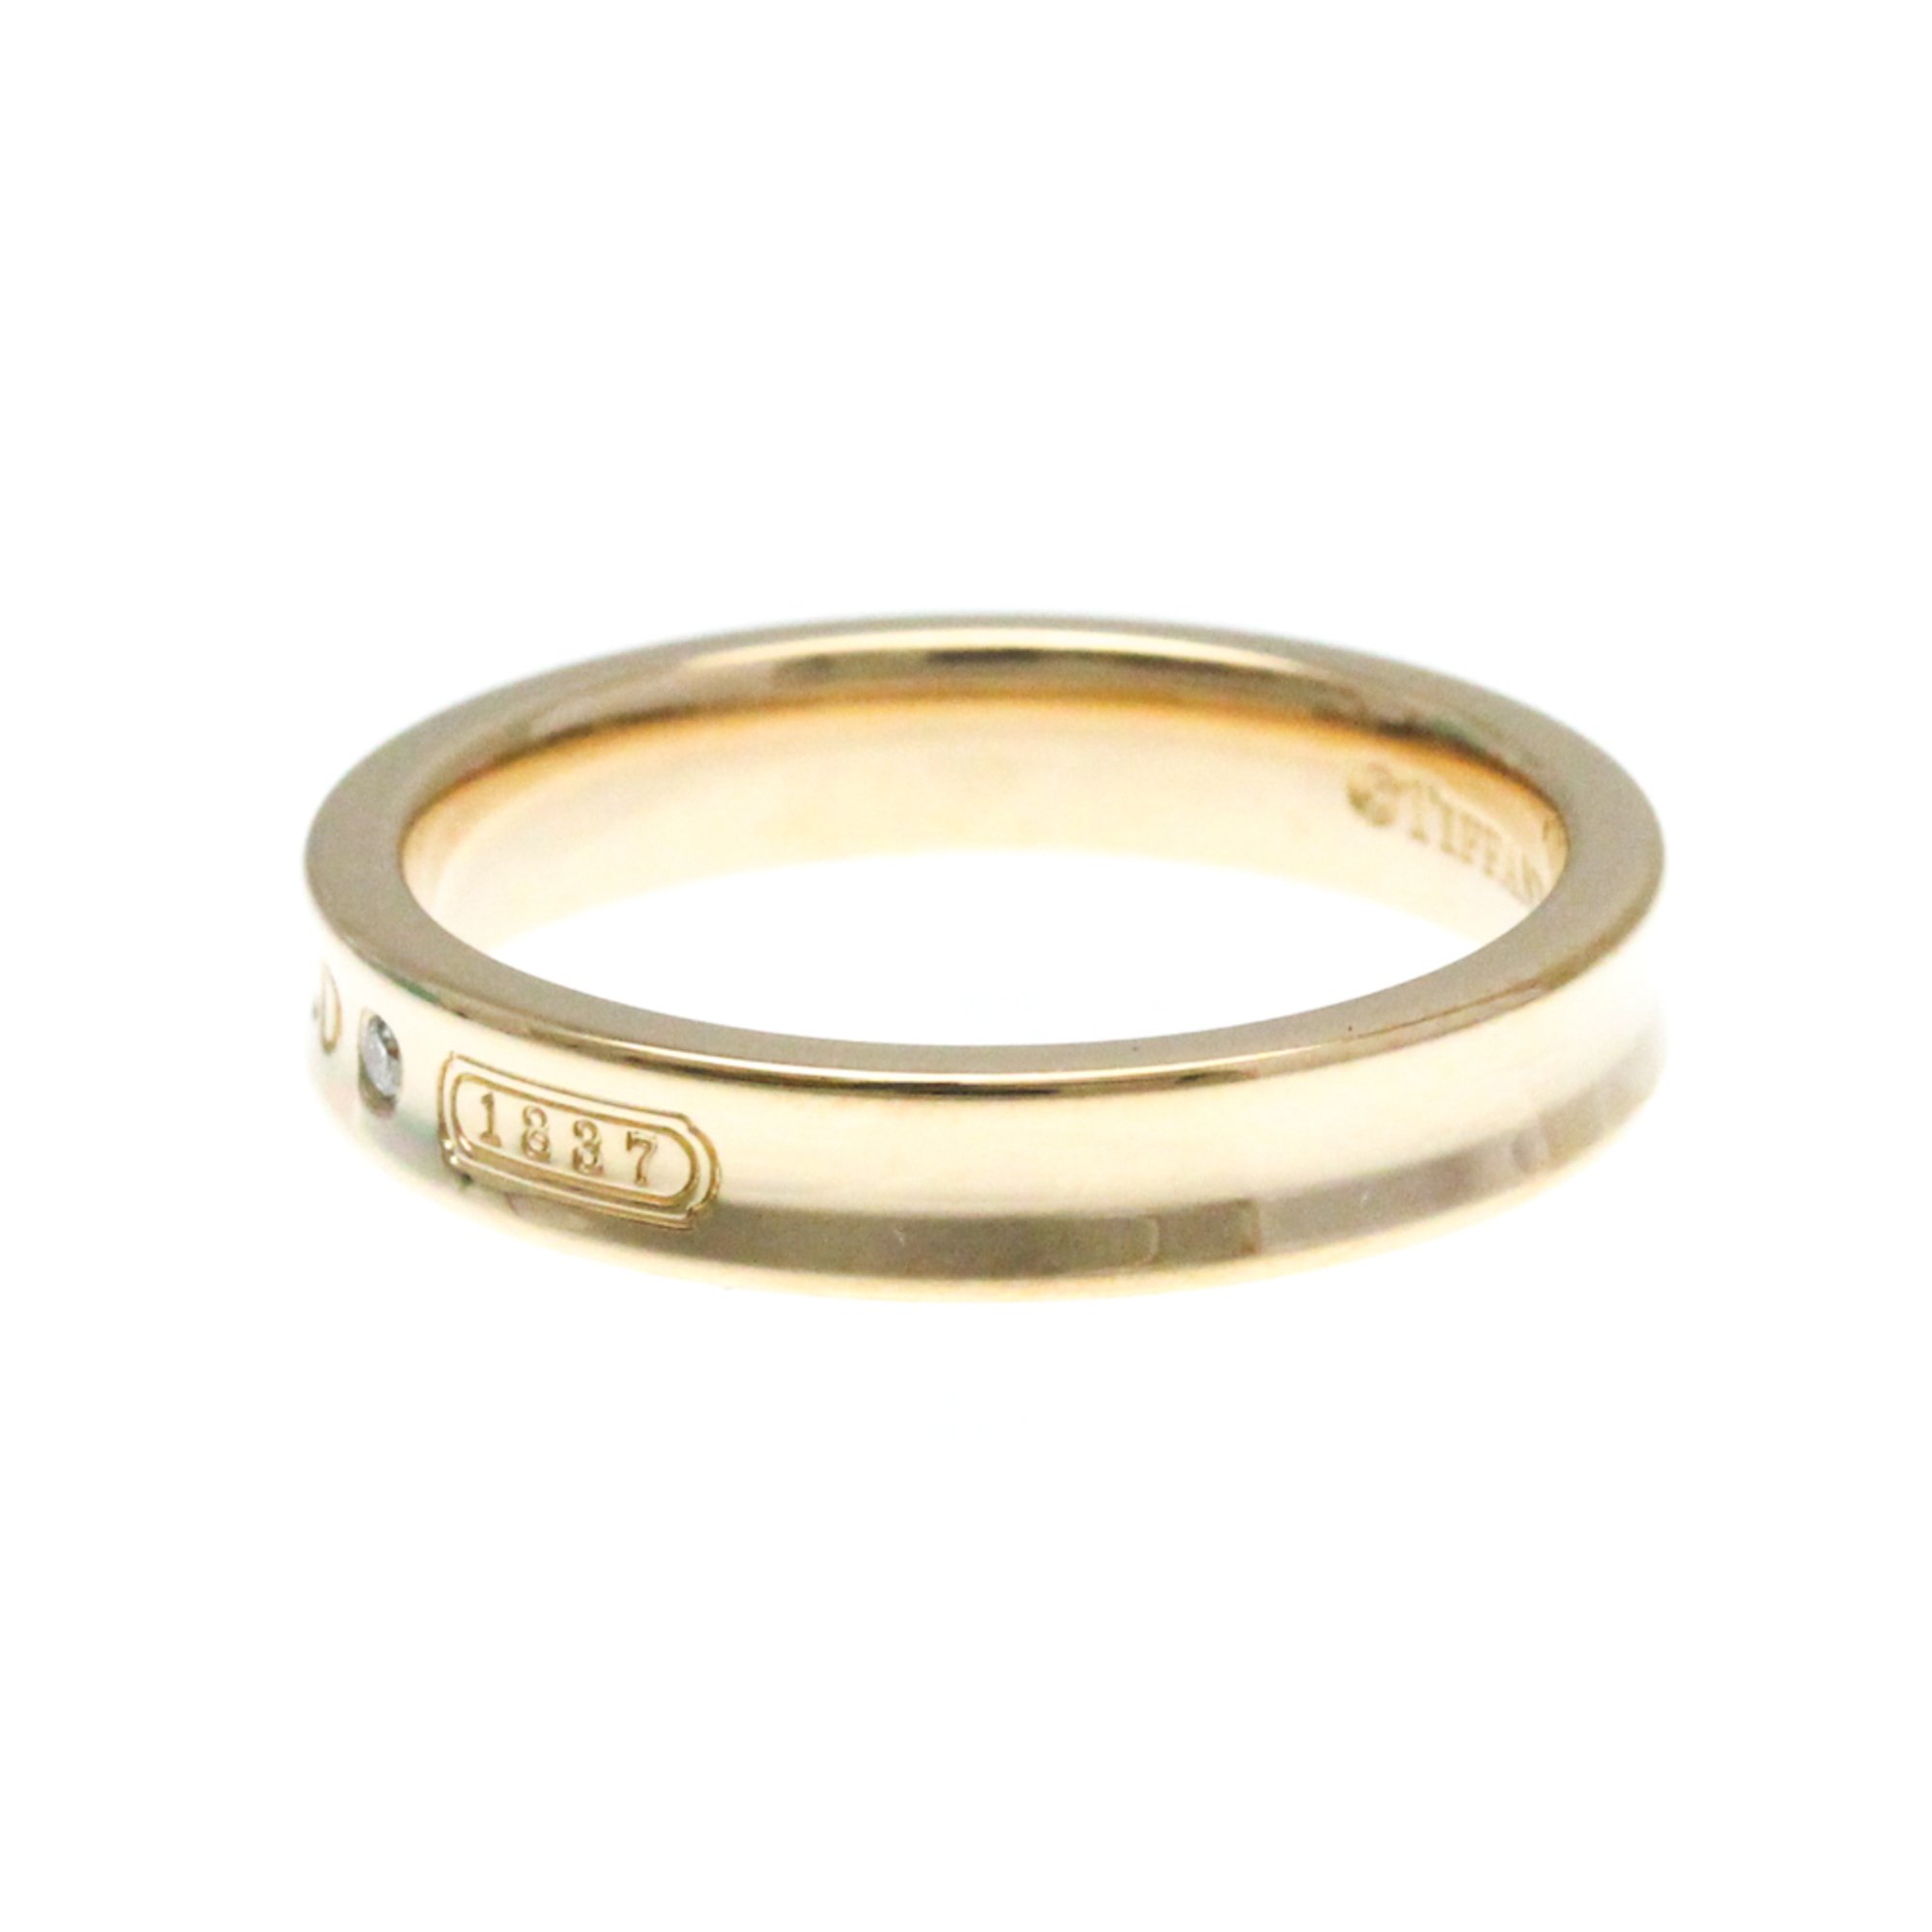 Tiffany 1837 2P Diamond Narrow Ring Pink Gold (18K) Fashion Diamond Band Ring Pink Gold